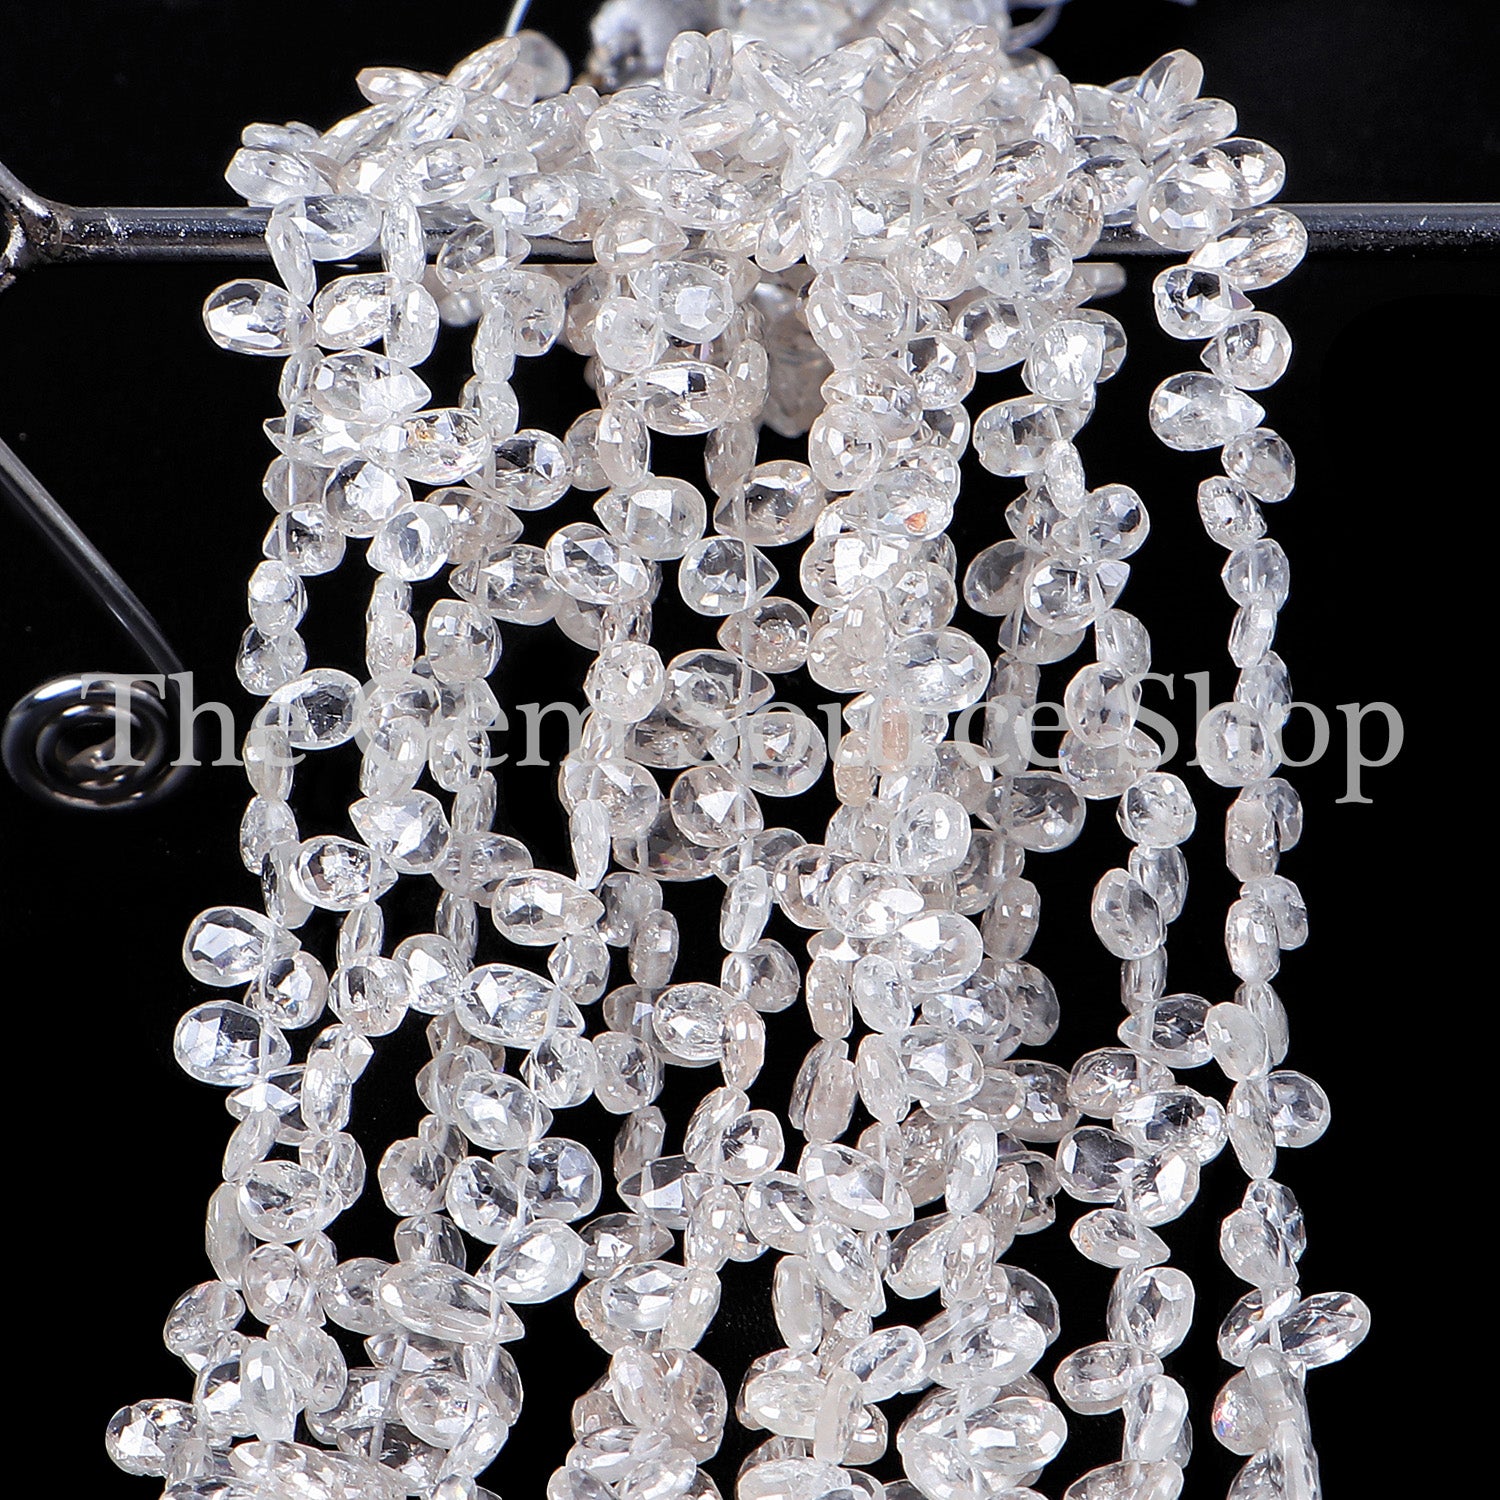 White Zircon Beads, White Zircon Faceted Beads, White Zircon Pear Shape Beads, Wholesale Beads